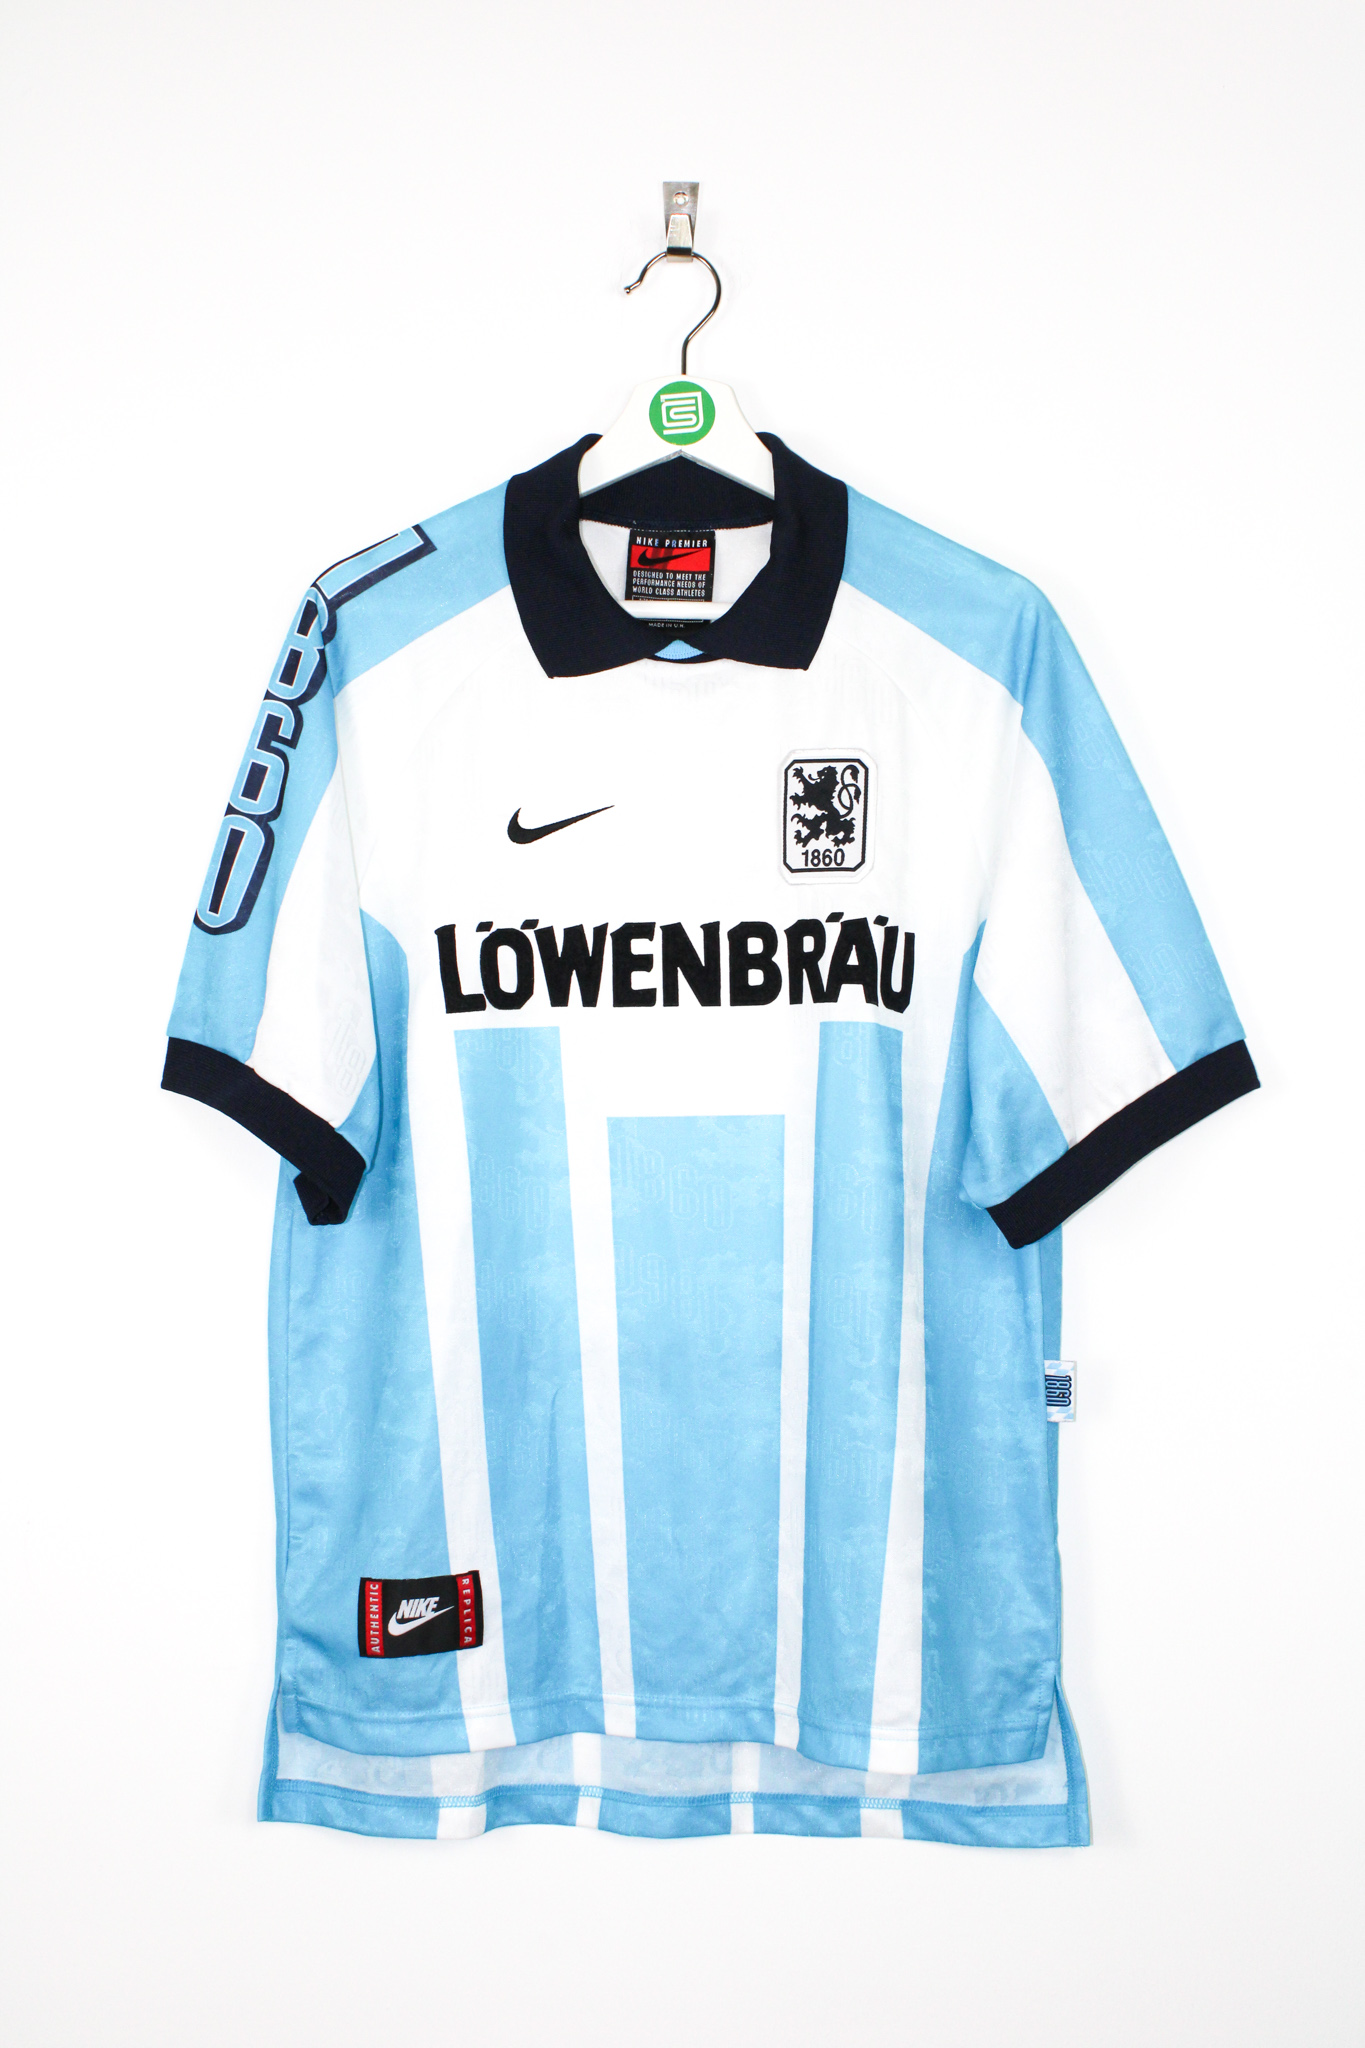 1860 Munich Football Shirts - Club Football Shirts